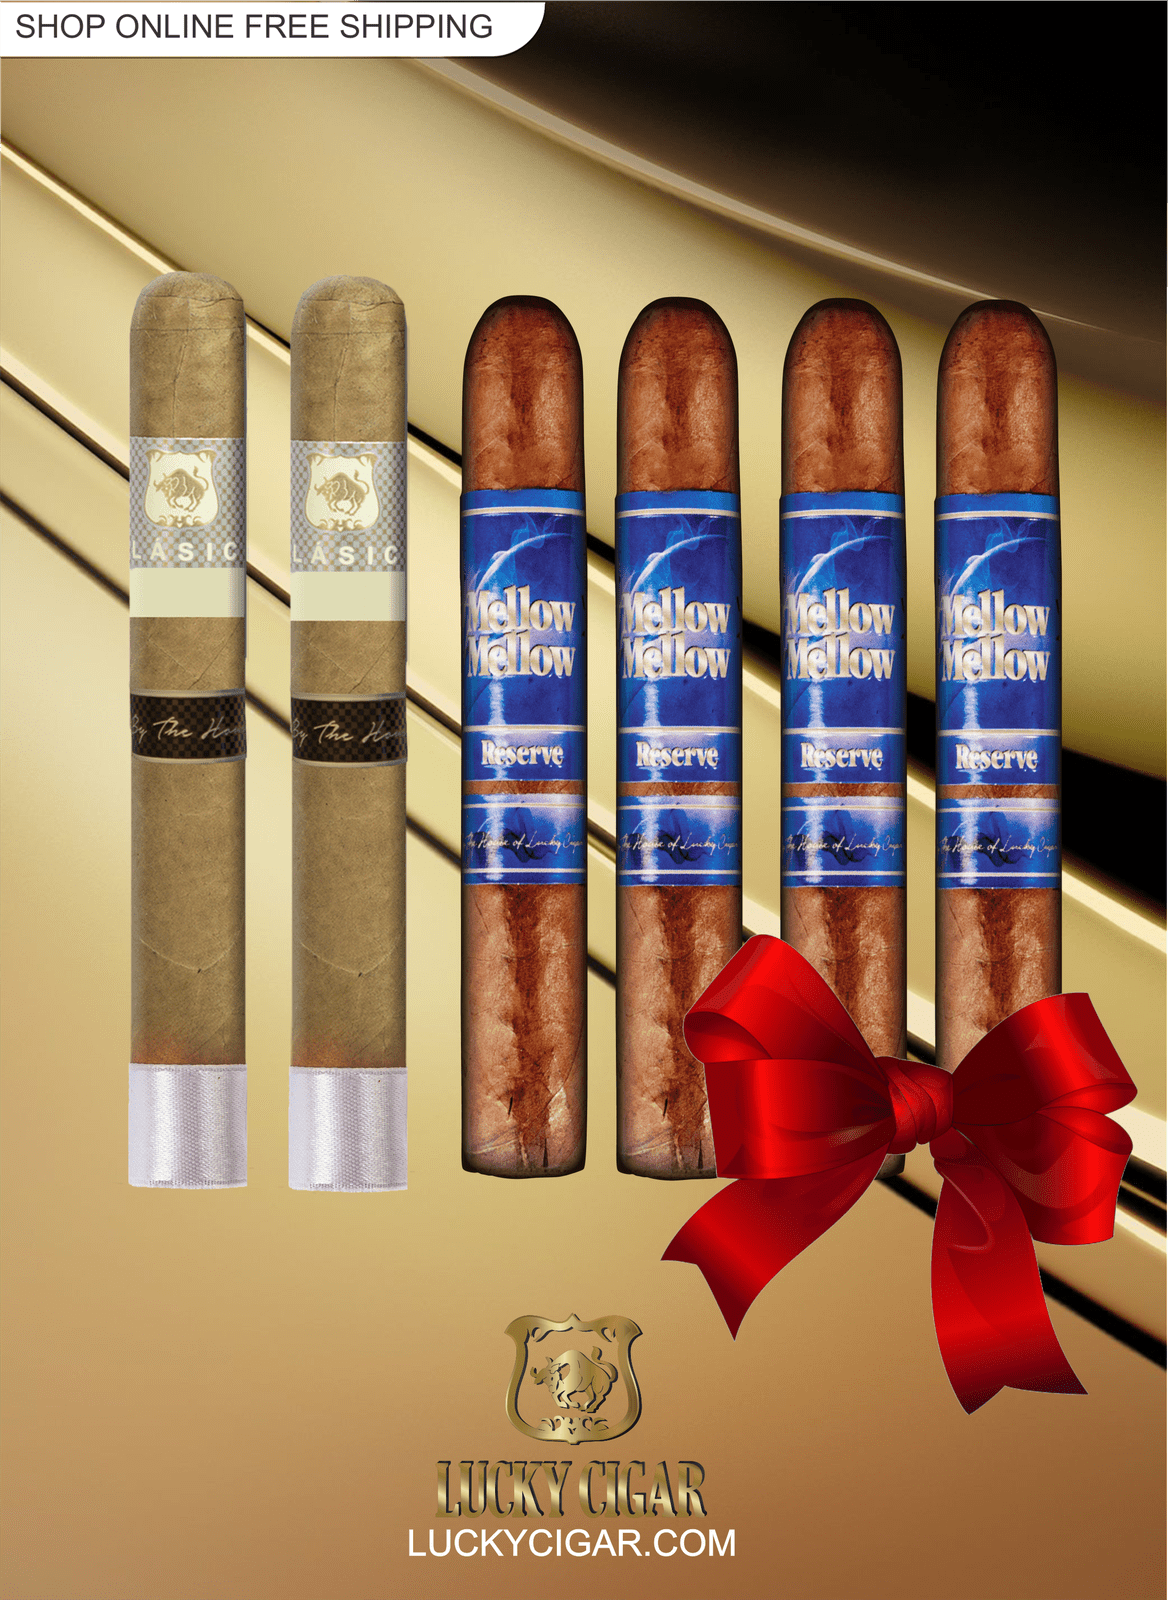 Lucky Cigar Sampler Sets: Set of 6 Toro Cigars, 2 Classico and 4 Mellow Mellow Reserve